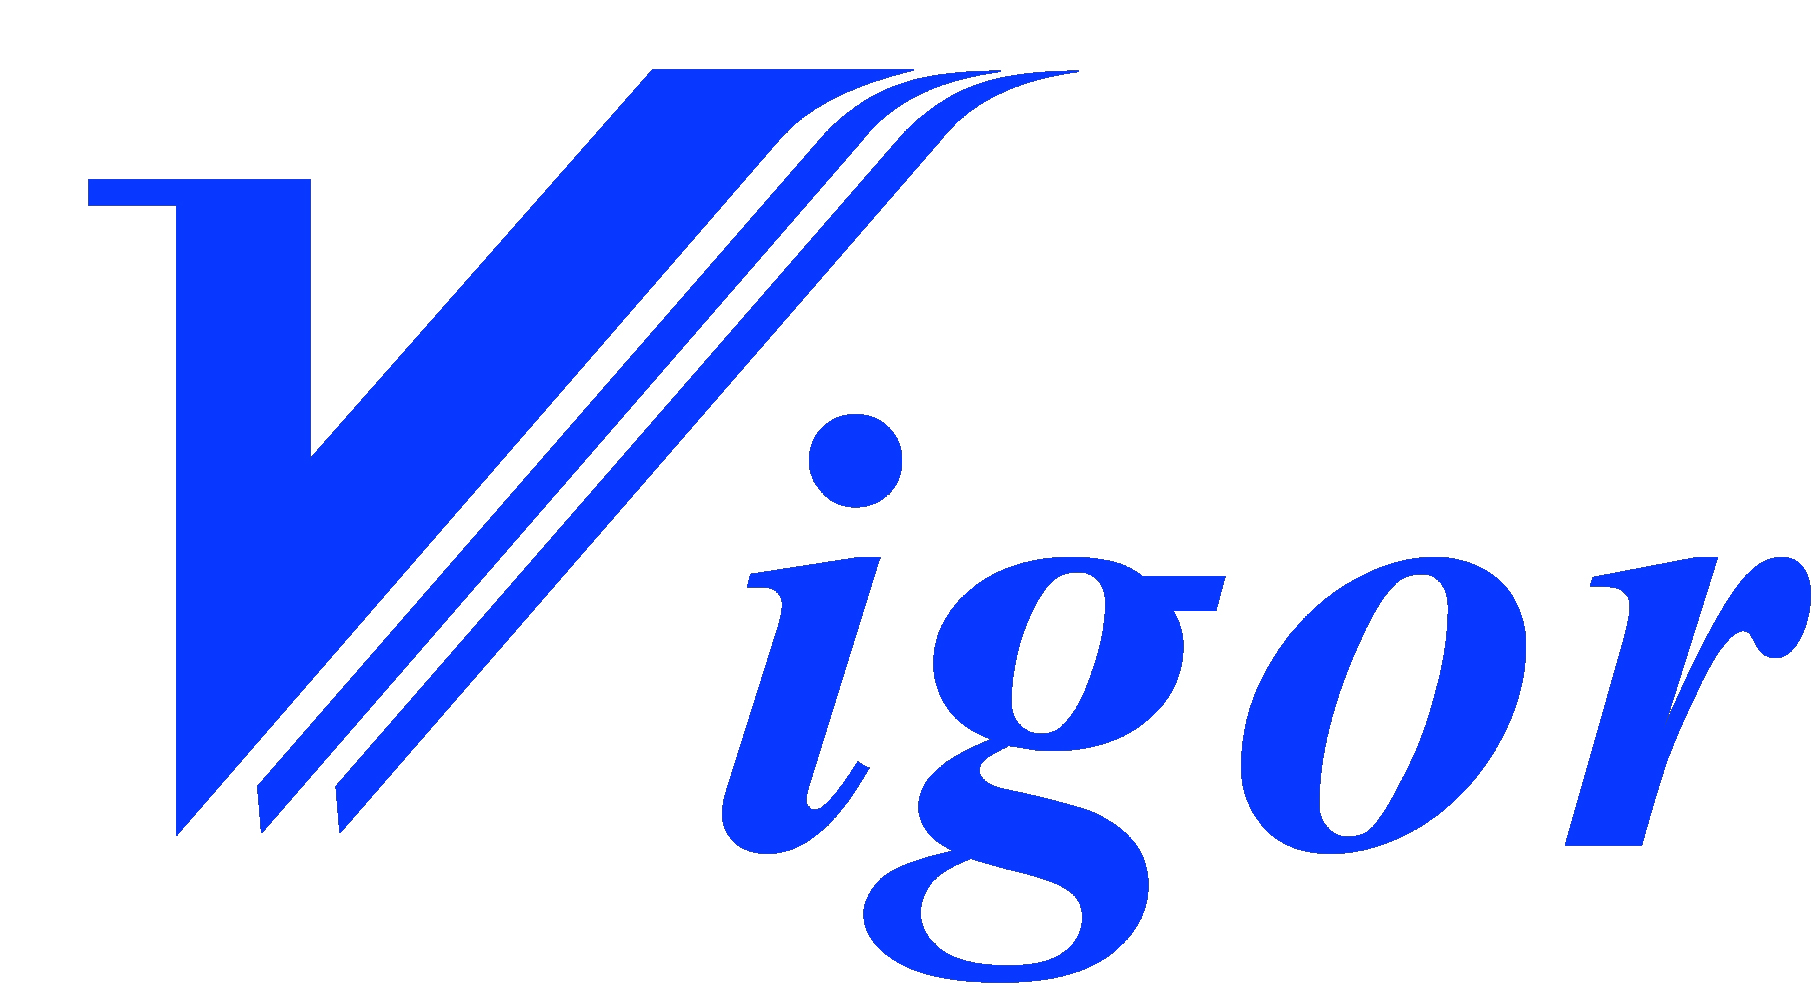 vigor_logo.jpg